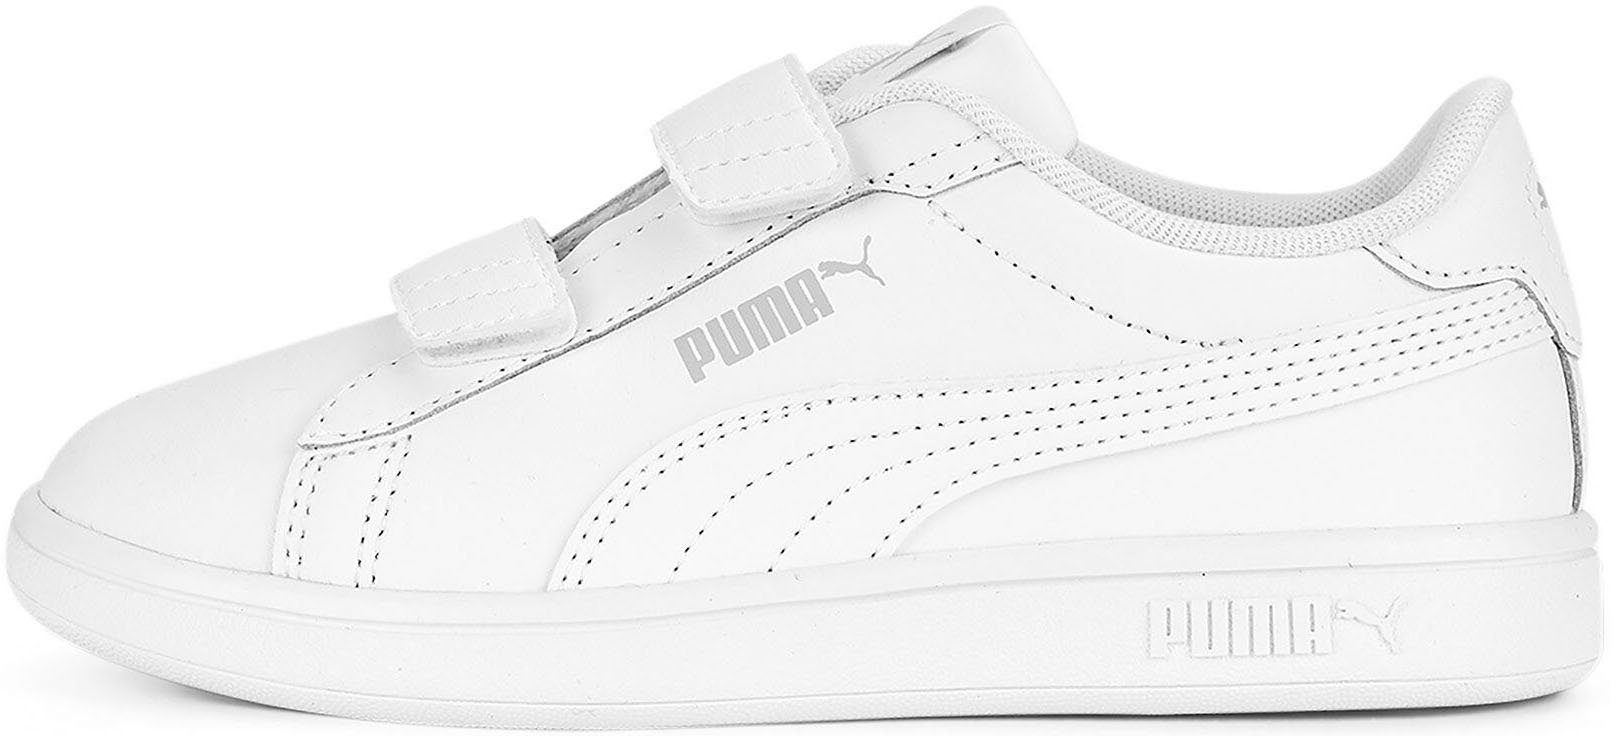 L SMASH 3.0 Gray Light PUMA mit Klettverschluss Sneaker PS V PUMA White-Cool